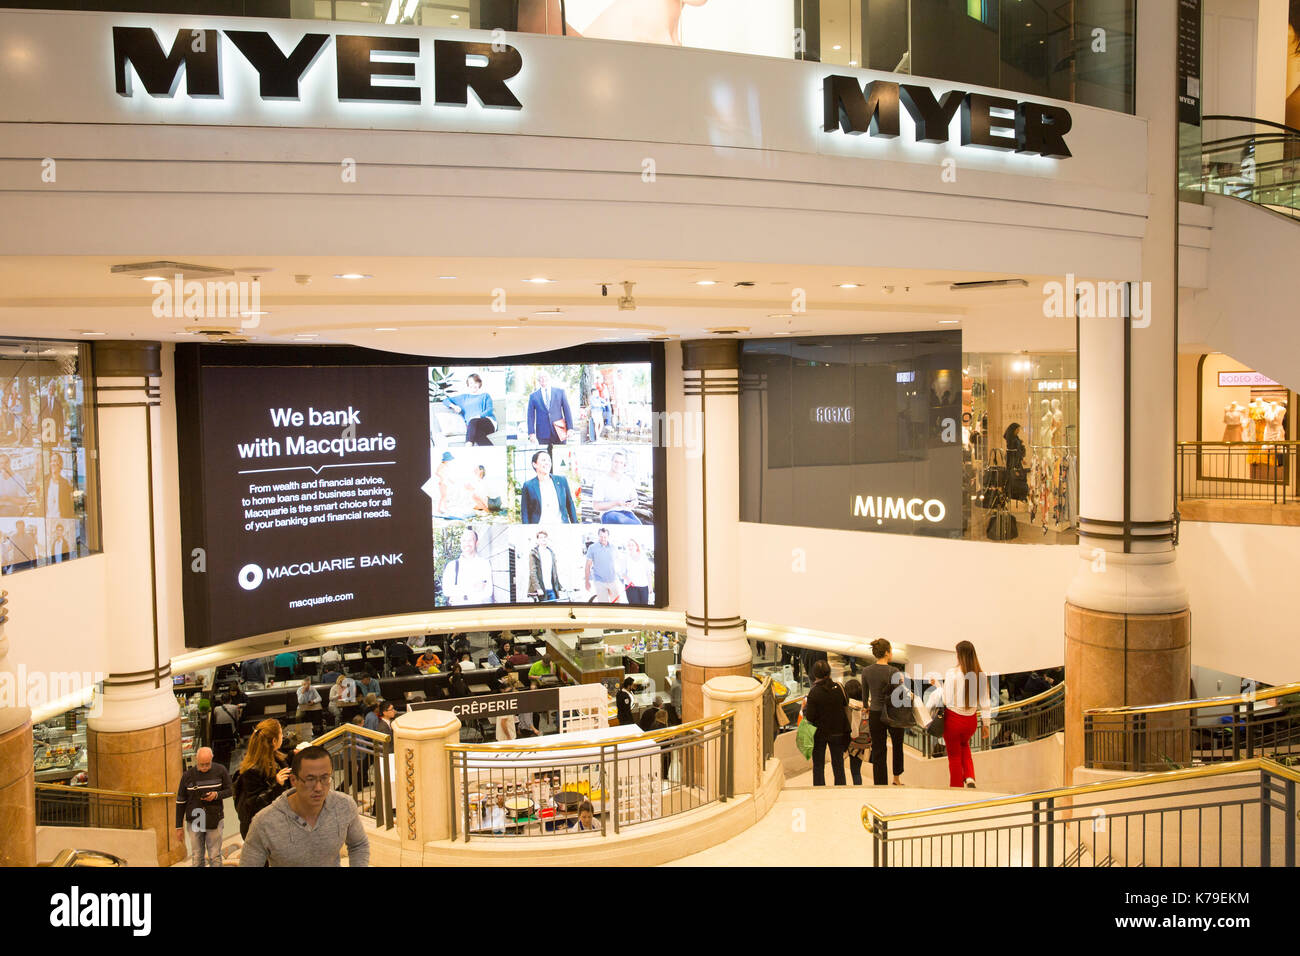 Myer department store retail in Pitt Street, il centro cittadino di Sydney, Australia Foto Stock